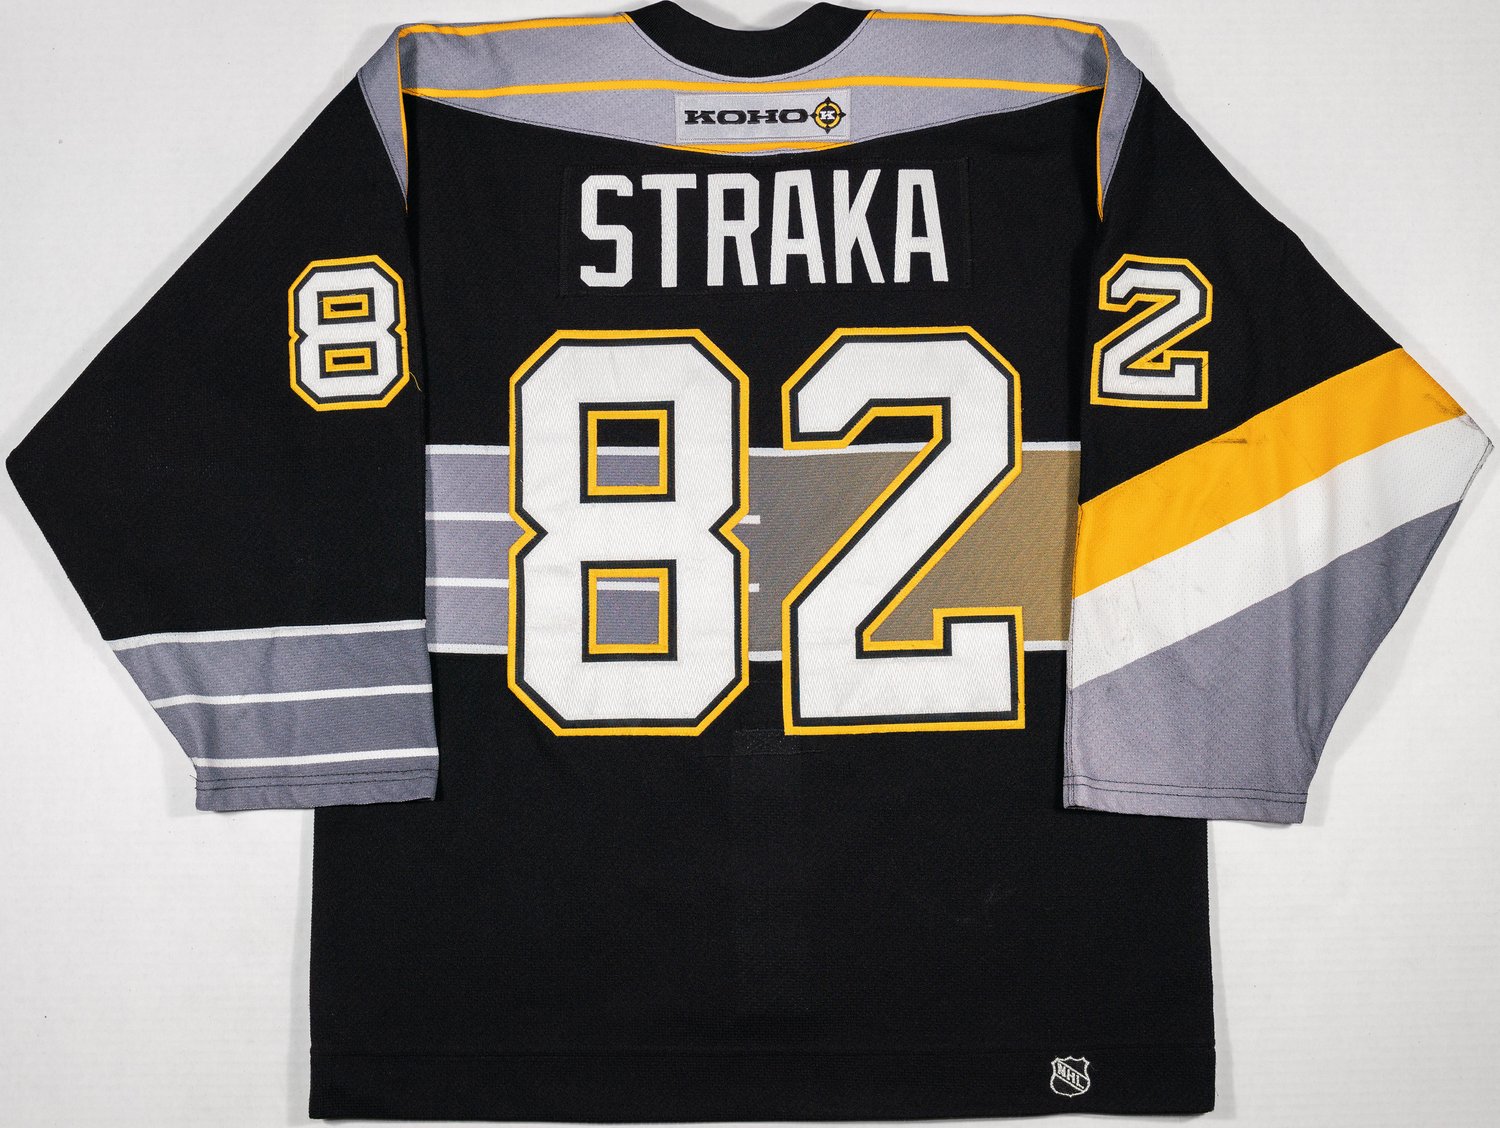 1997-98 Martin Straka Pittsburgh Penguins Game Worn Jersey - Photo